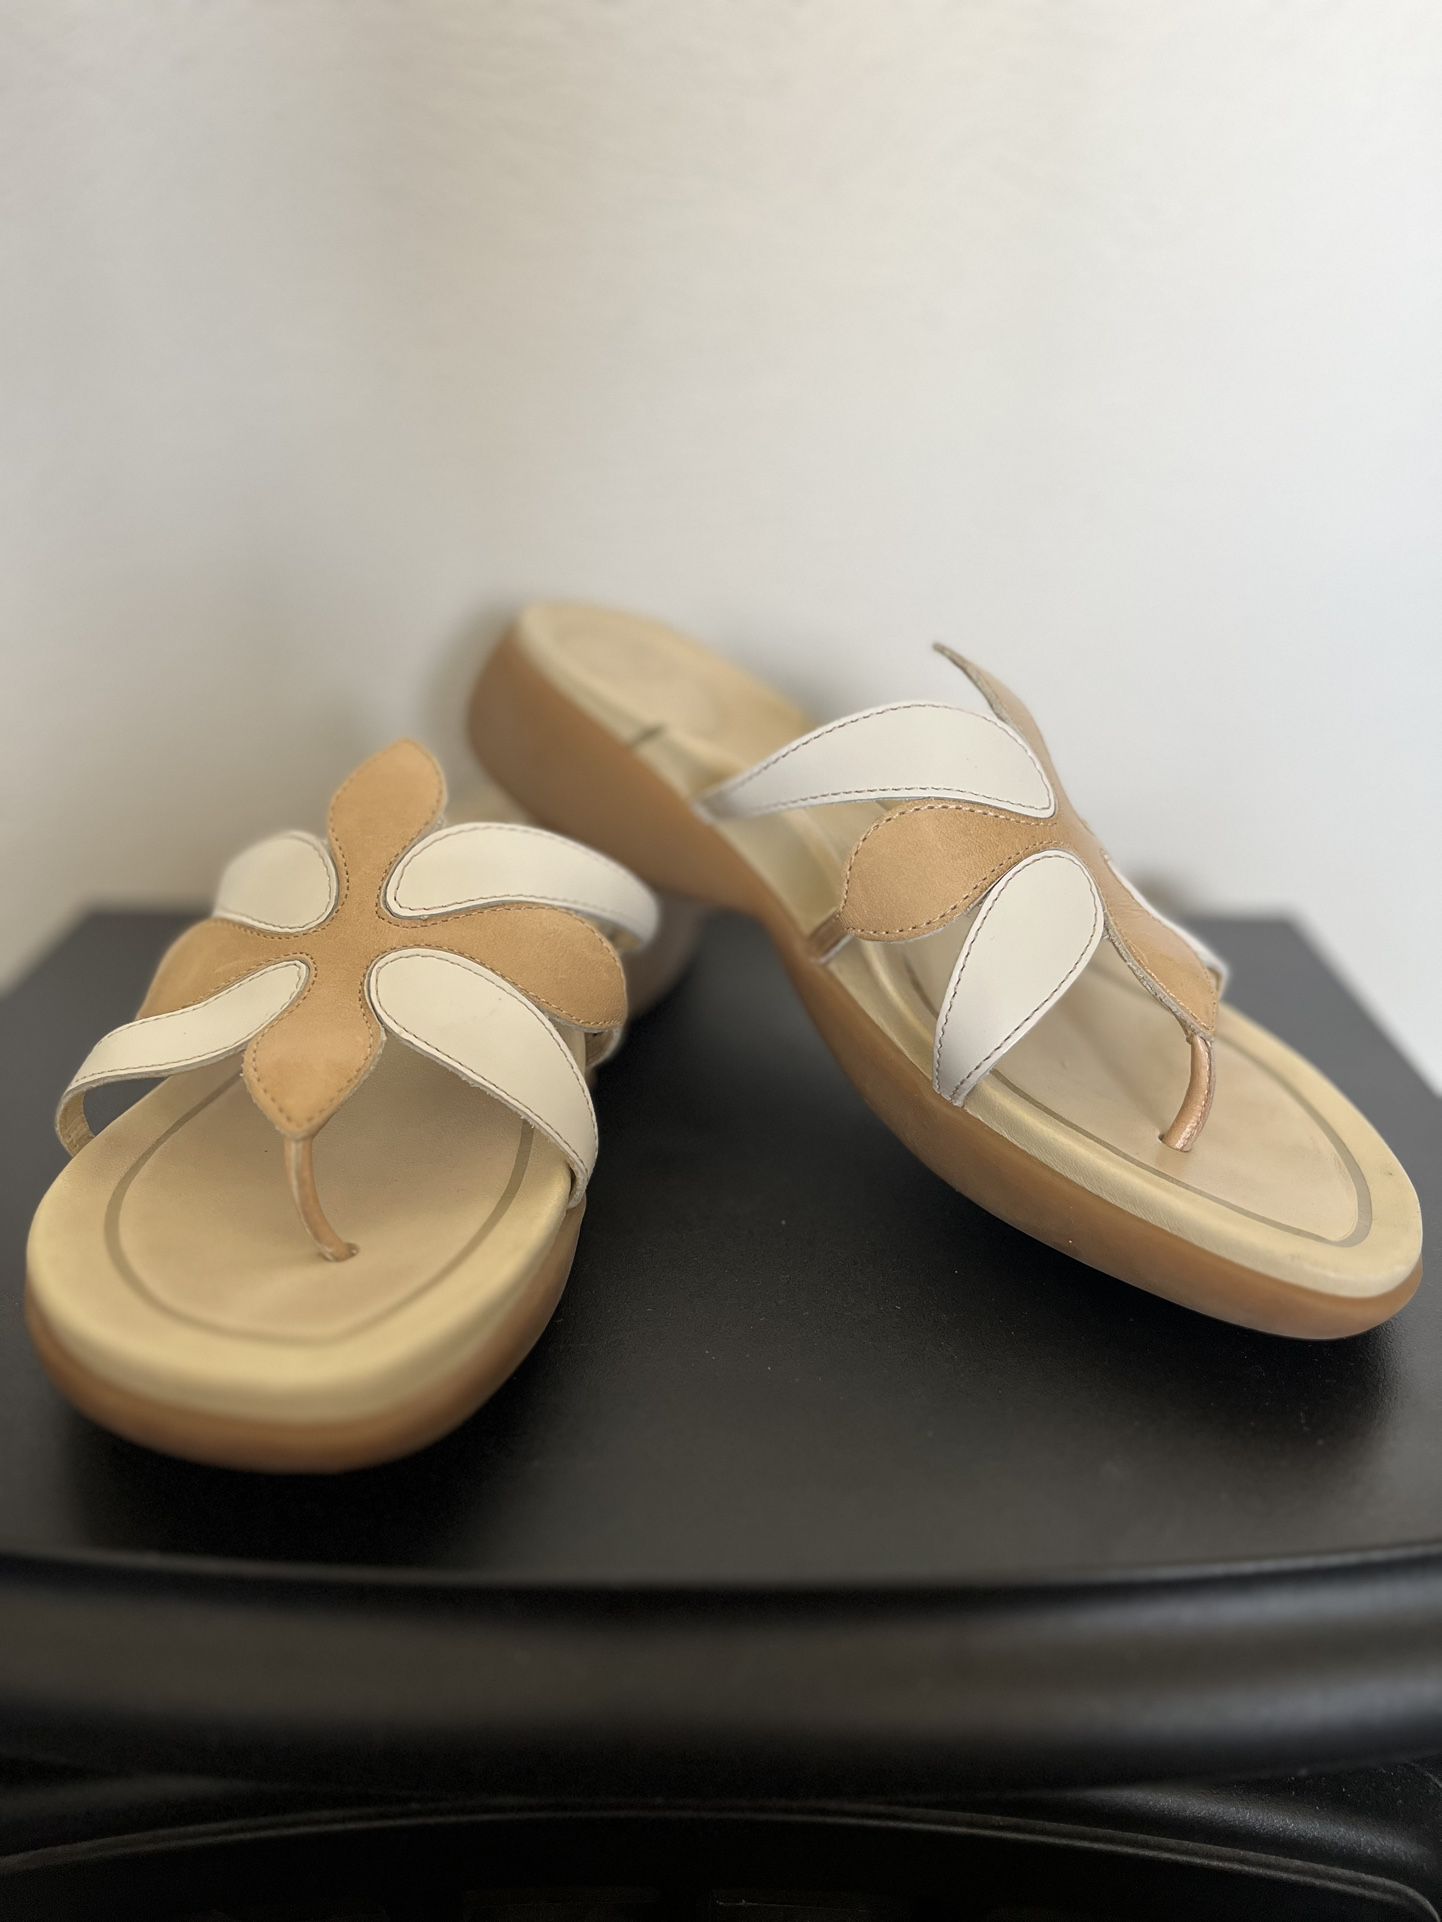 Dansko Tan Sandals Size 7